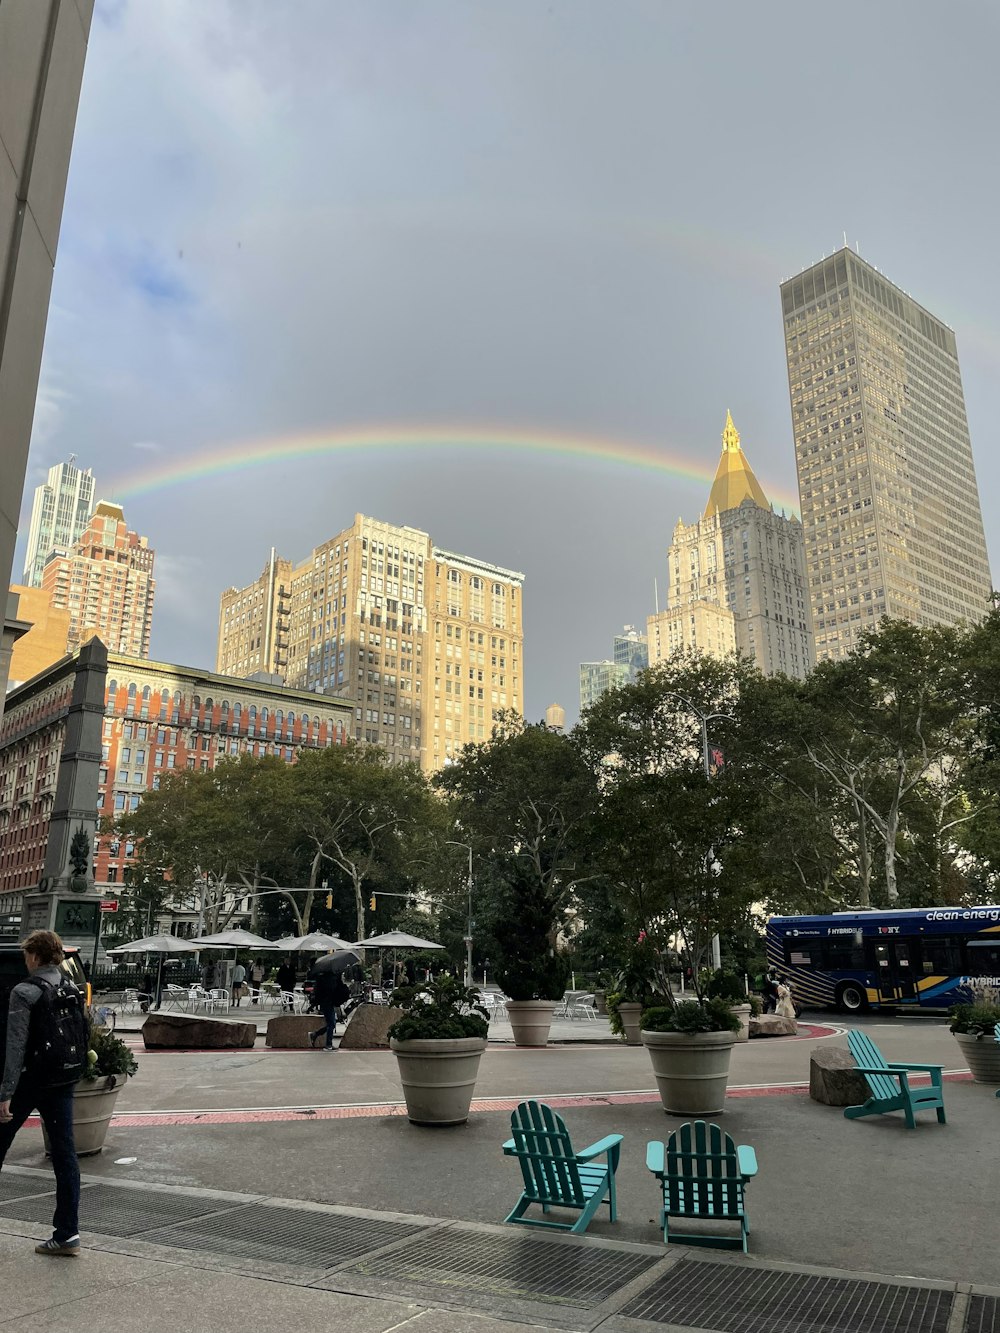 a rainbow in the sky over a city